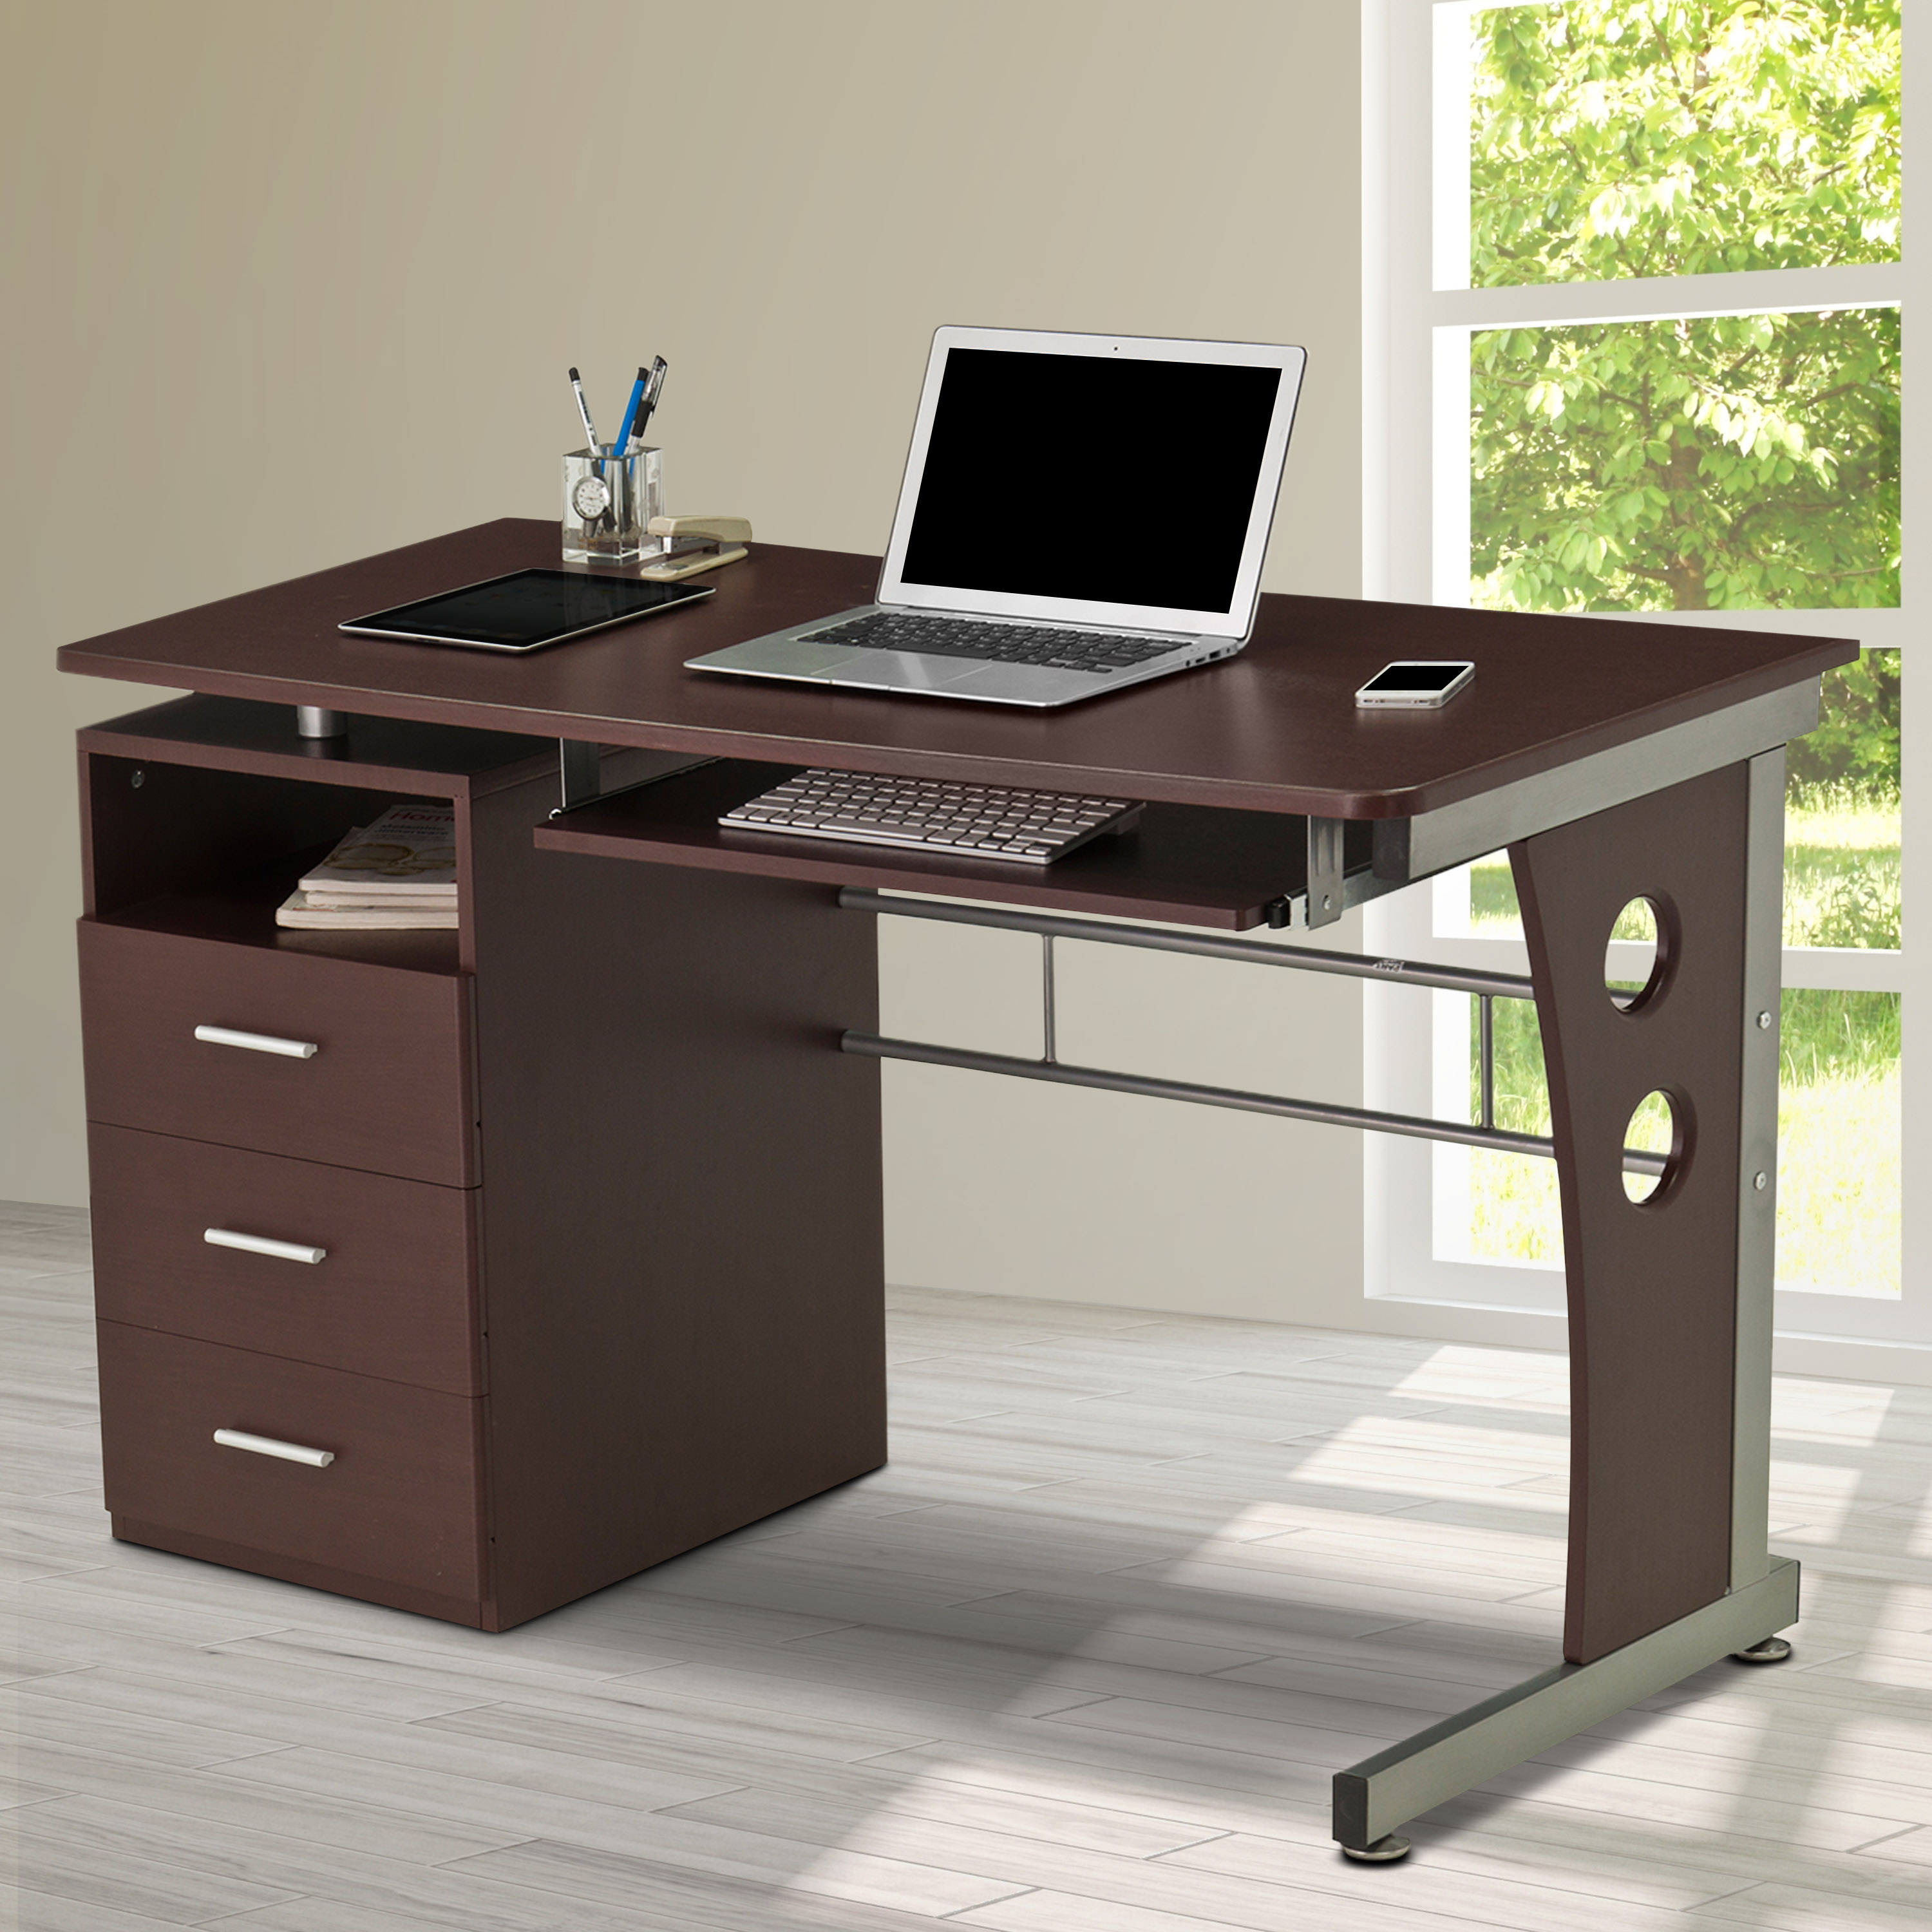 EUGAD Computer Desk with Shelves PC Laptop Desktop Workstation Study Table Home Office Work Table Metal MDF 116x80x75cm Light Oak